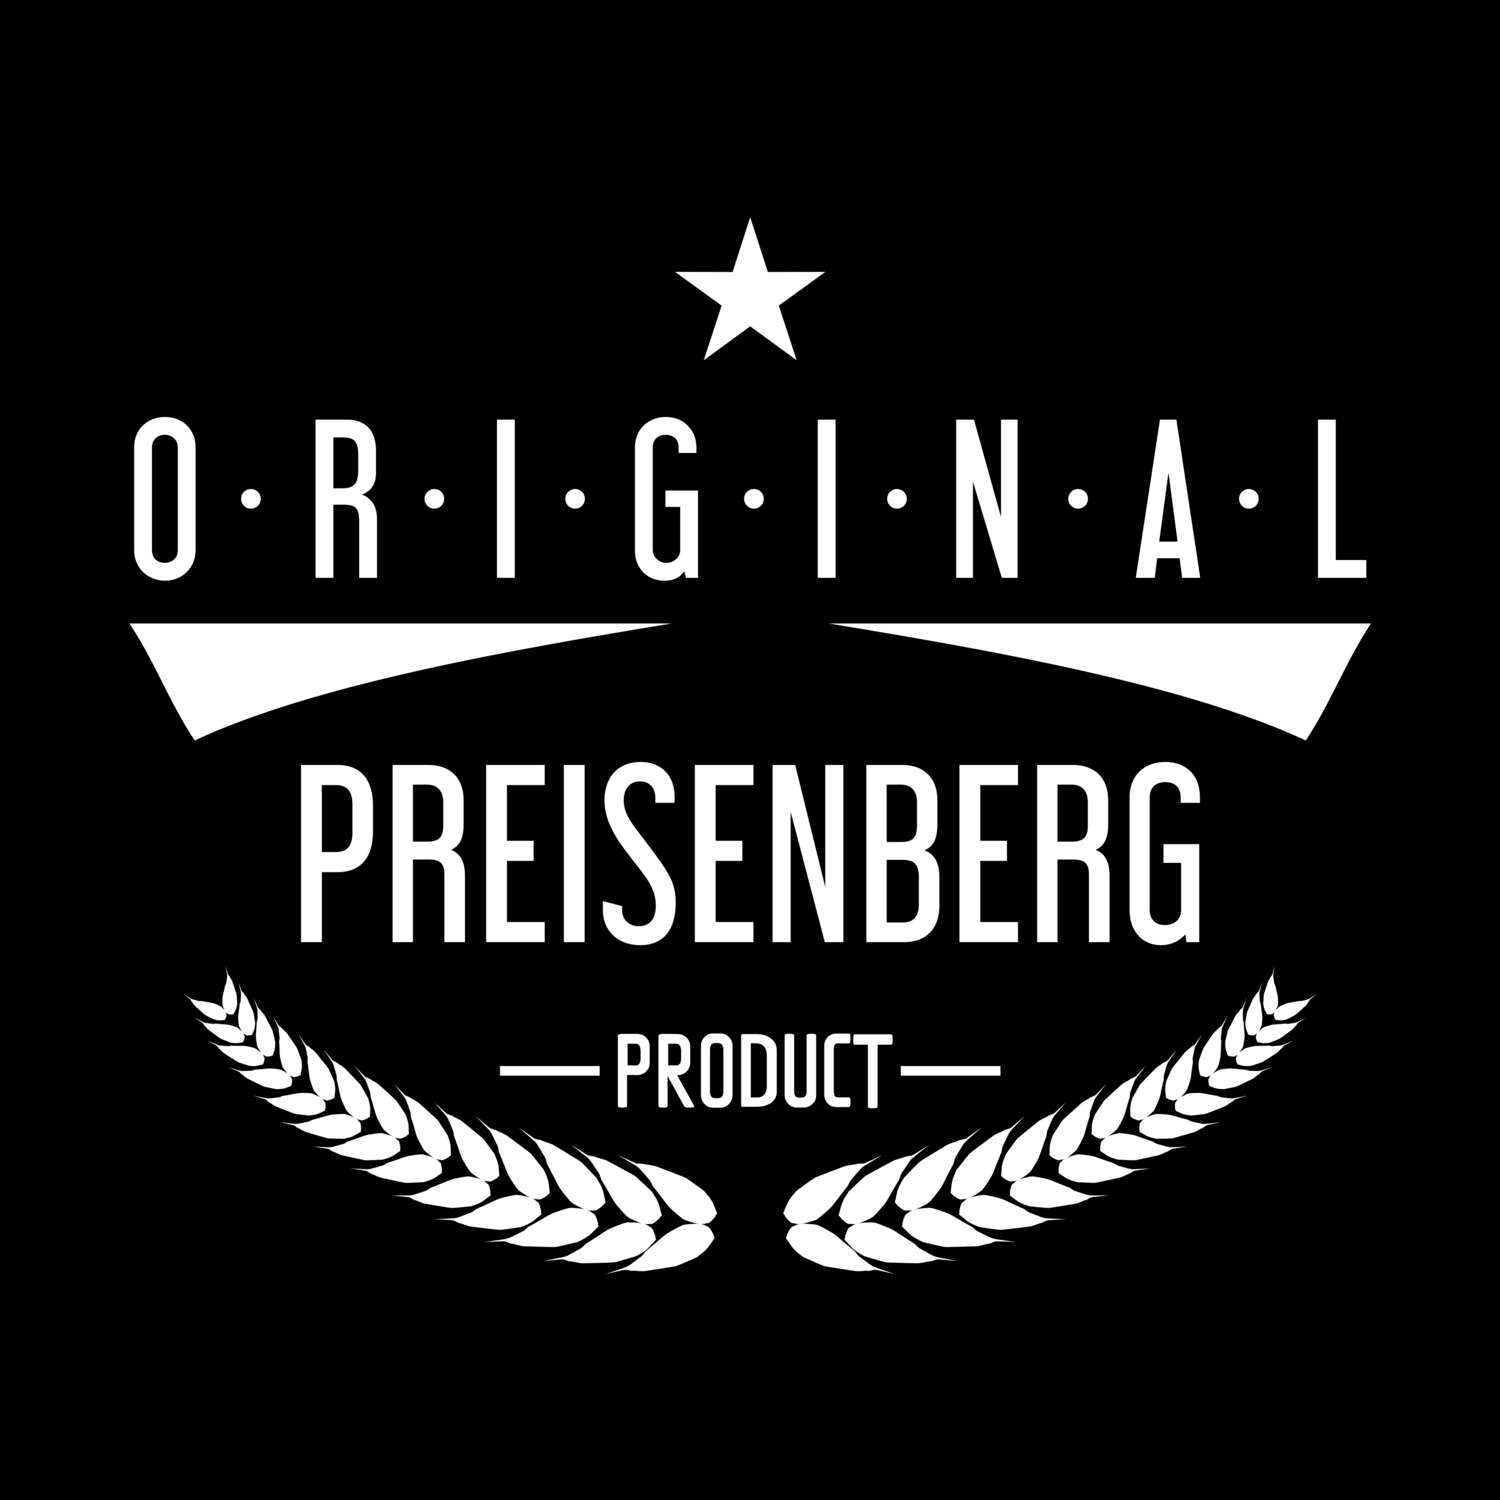 Preisenberg T-Shirt »Original Product«